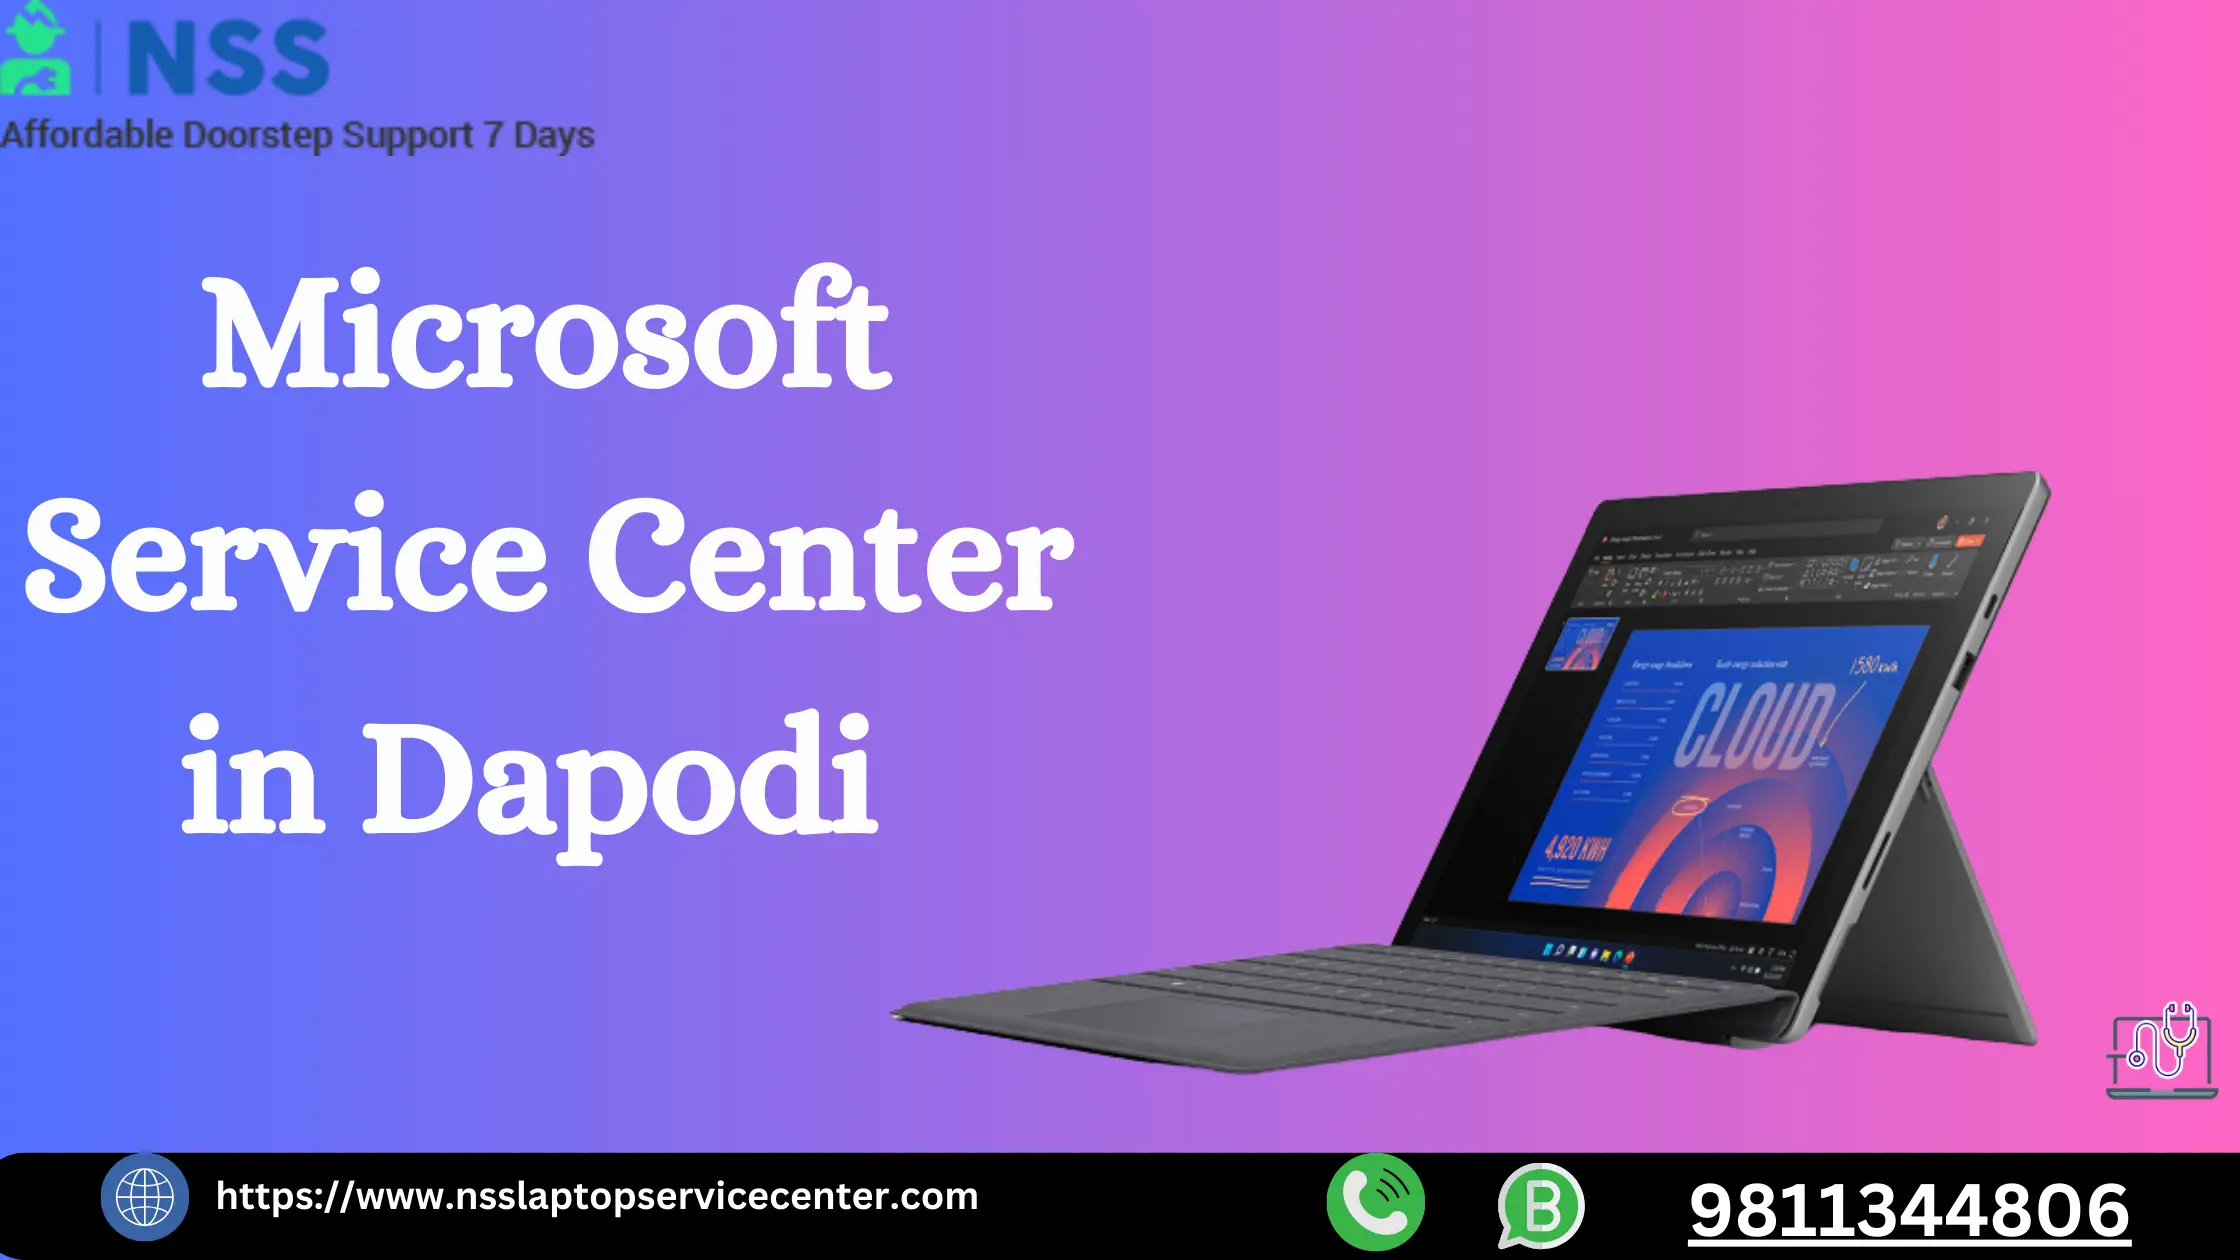 Microsoft Service Center in Dapodi Near Pune